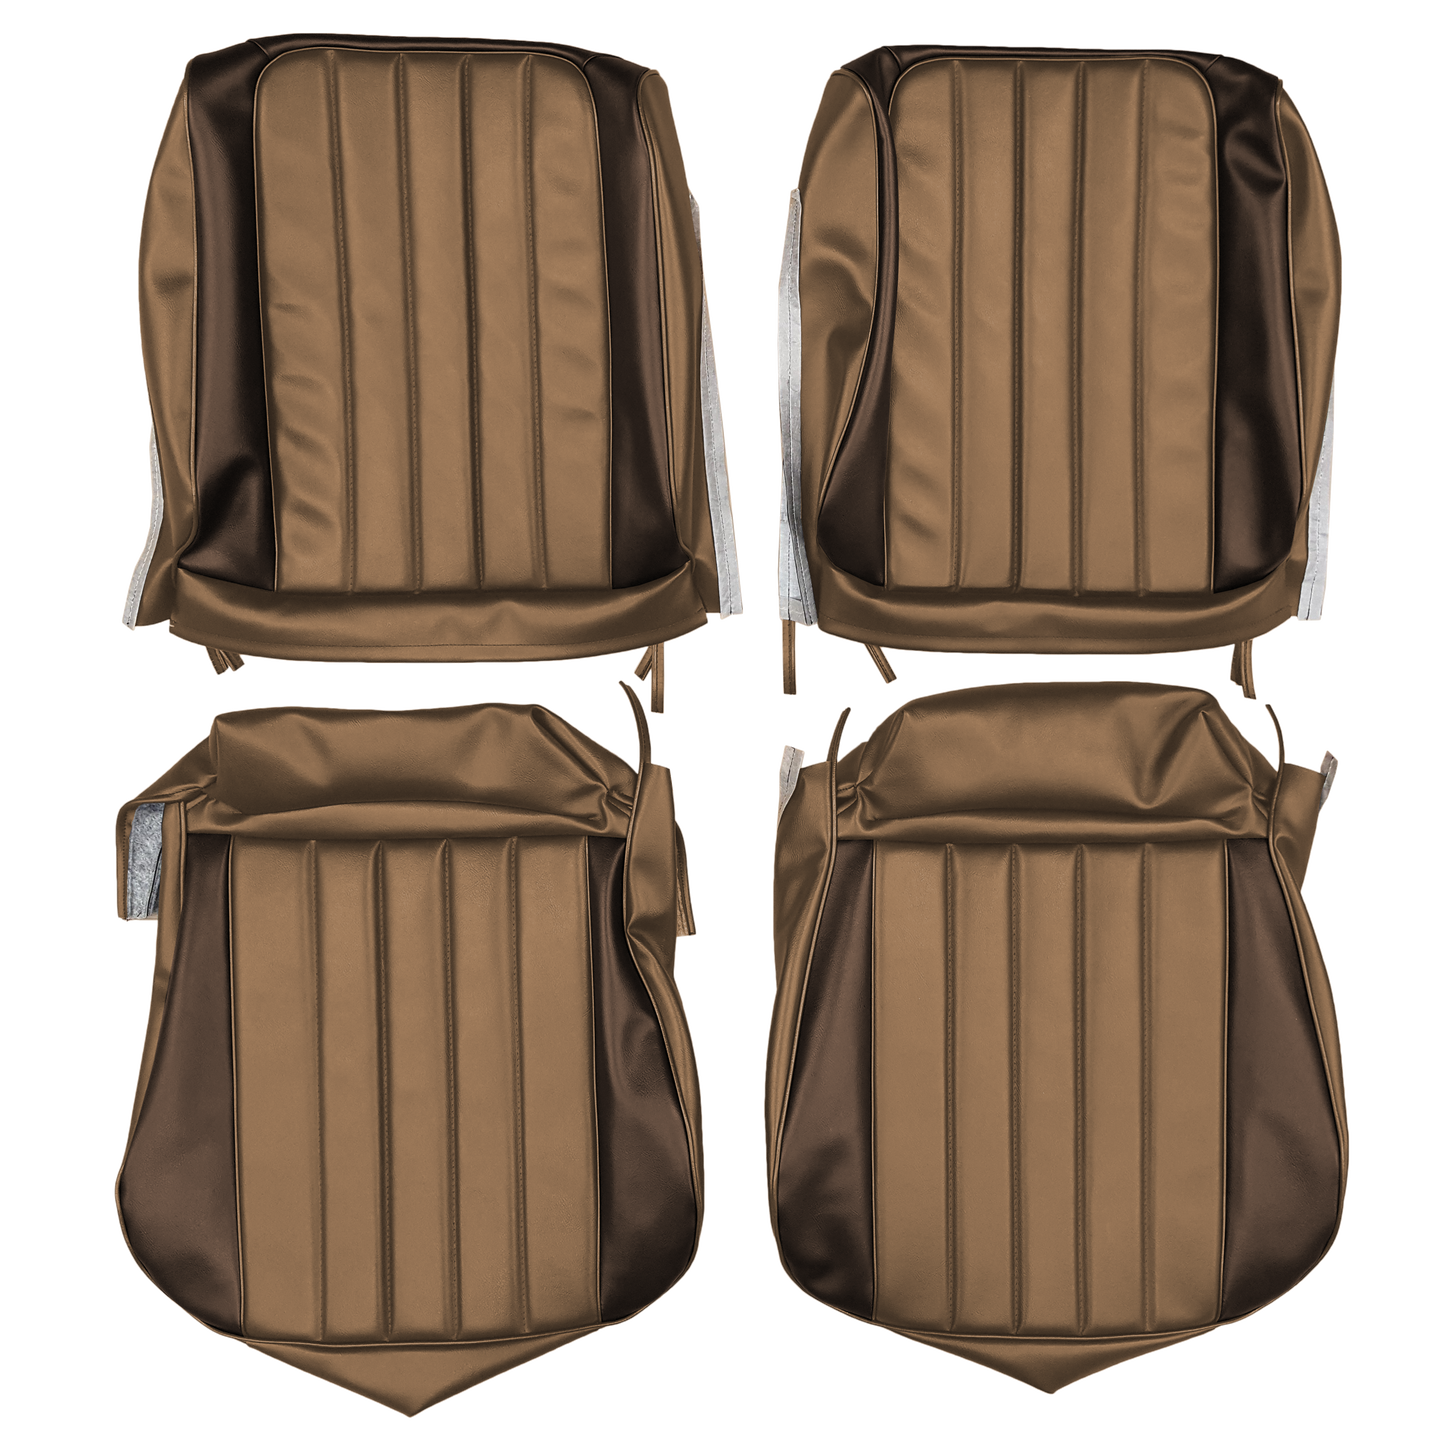 65 SKYLARK/GS COUPE BUCKET SEAT UPHOLSTERY - SRM SADDLE/SRM BROWN